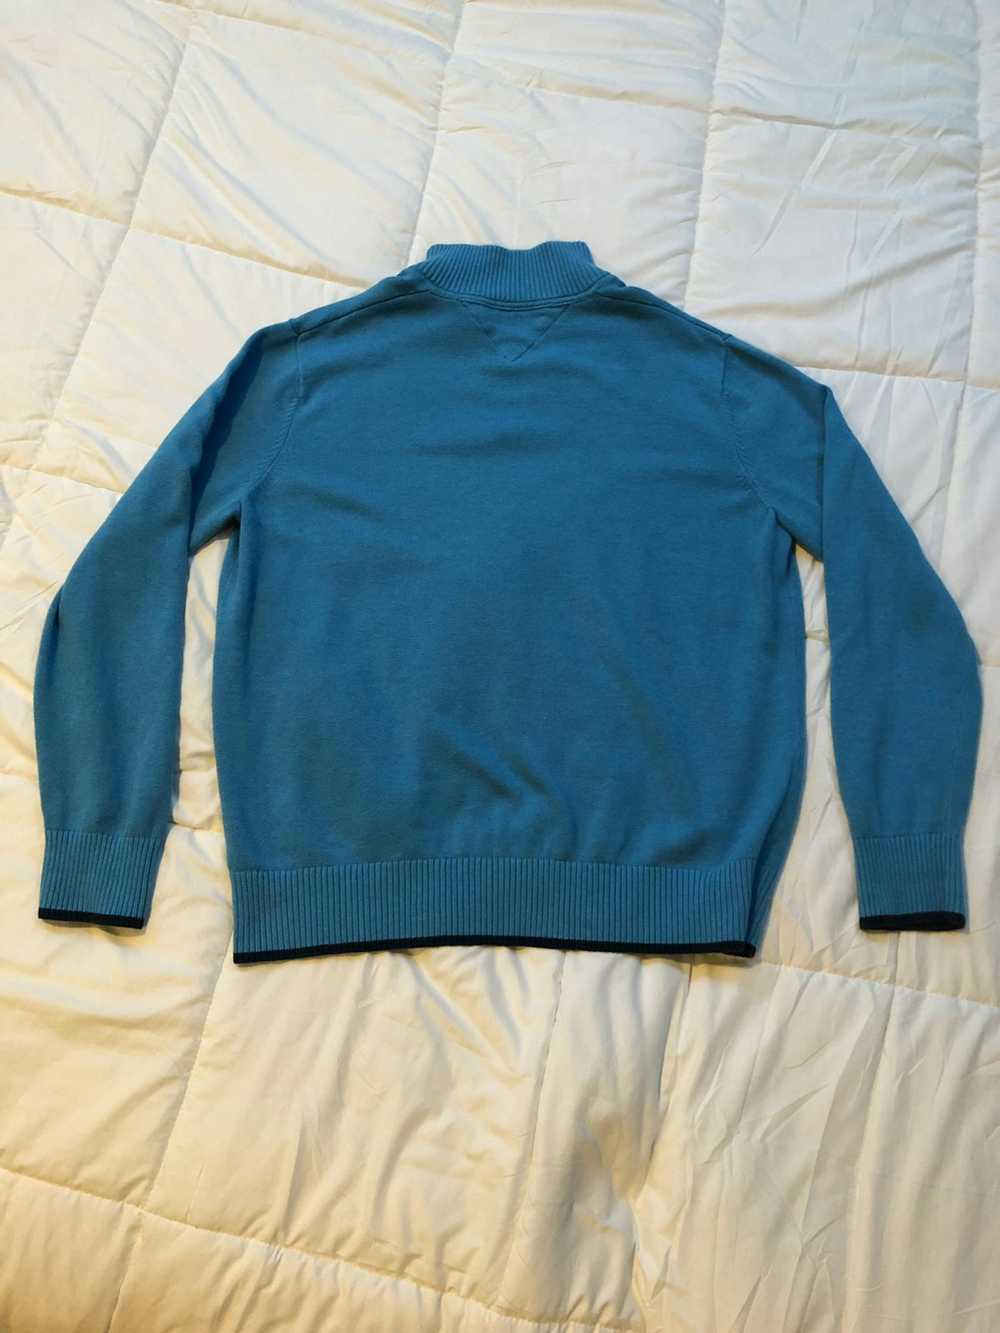 Tommy Hilfiger Tommy Hilfiger half zip sweater - image 3